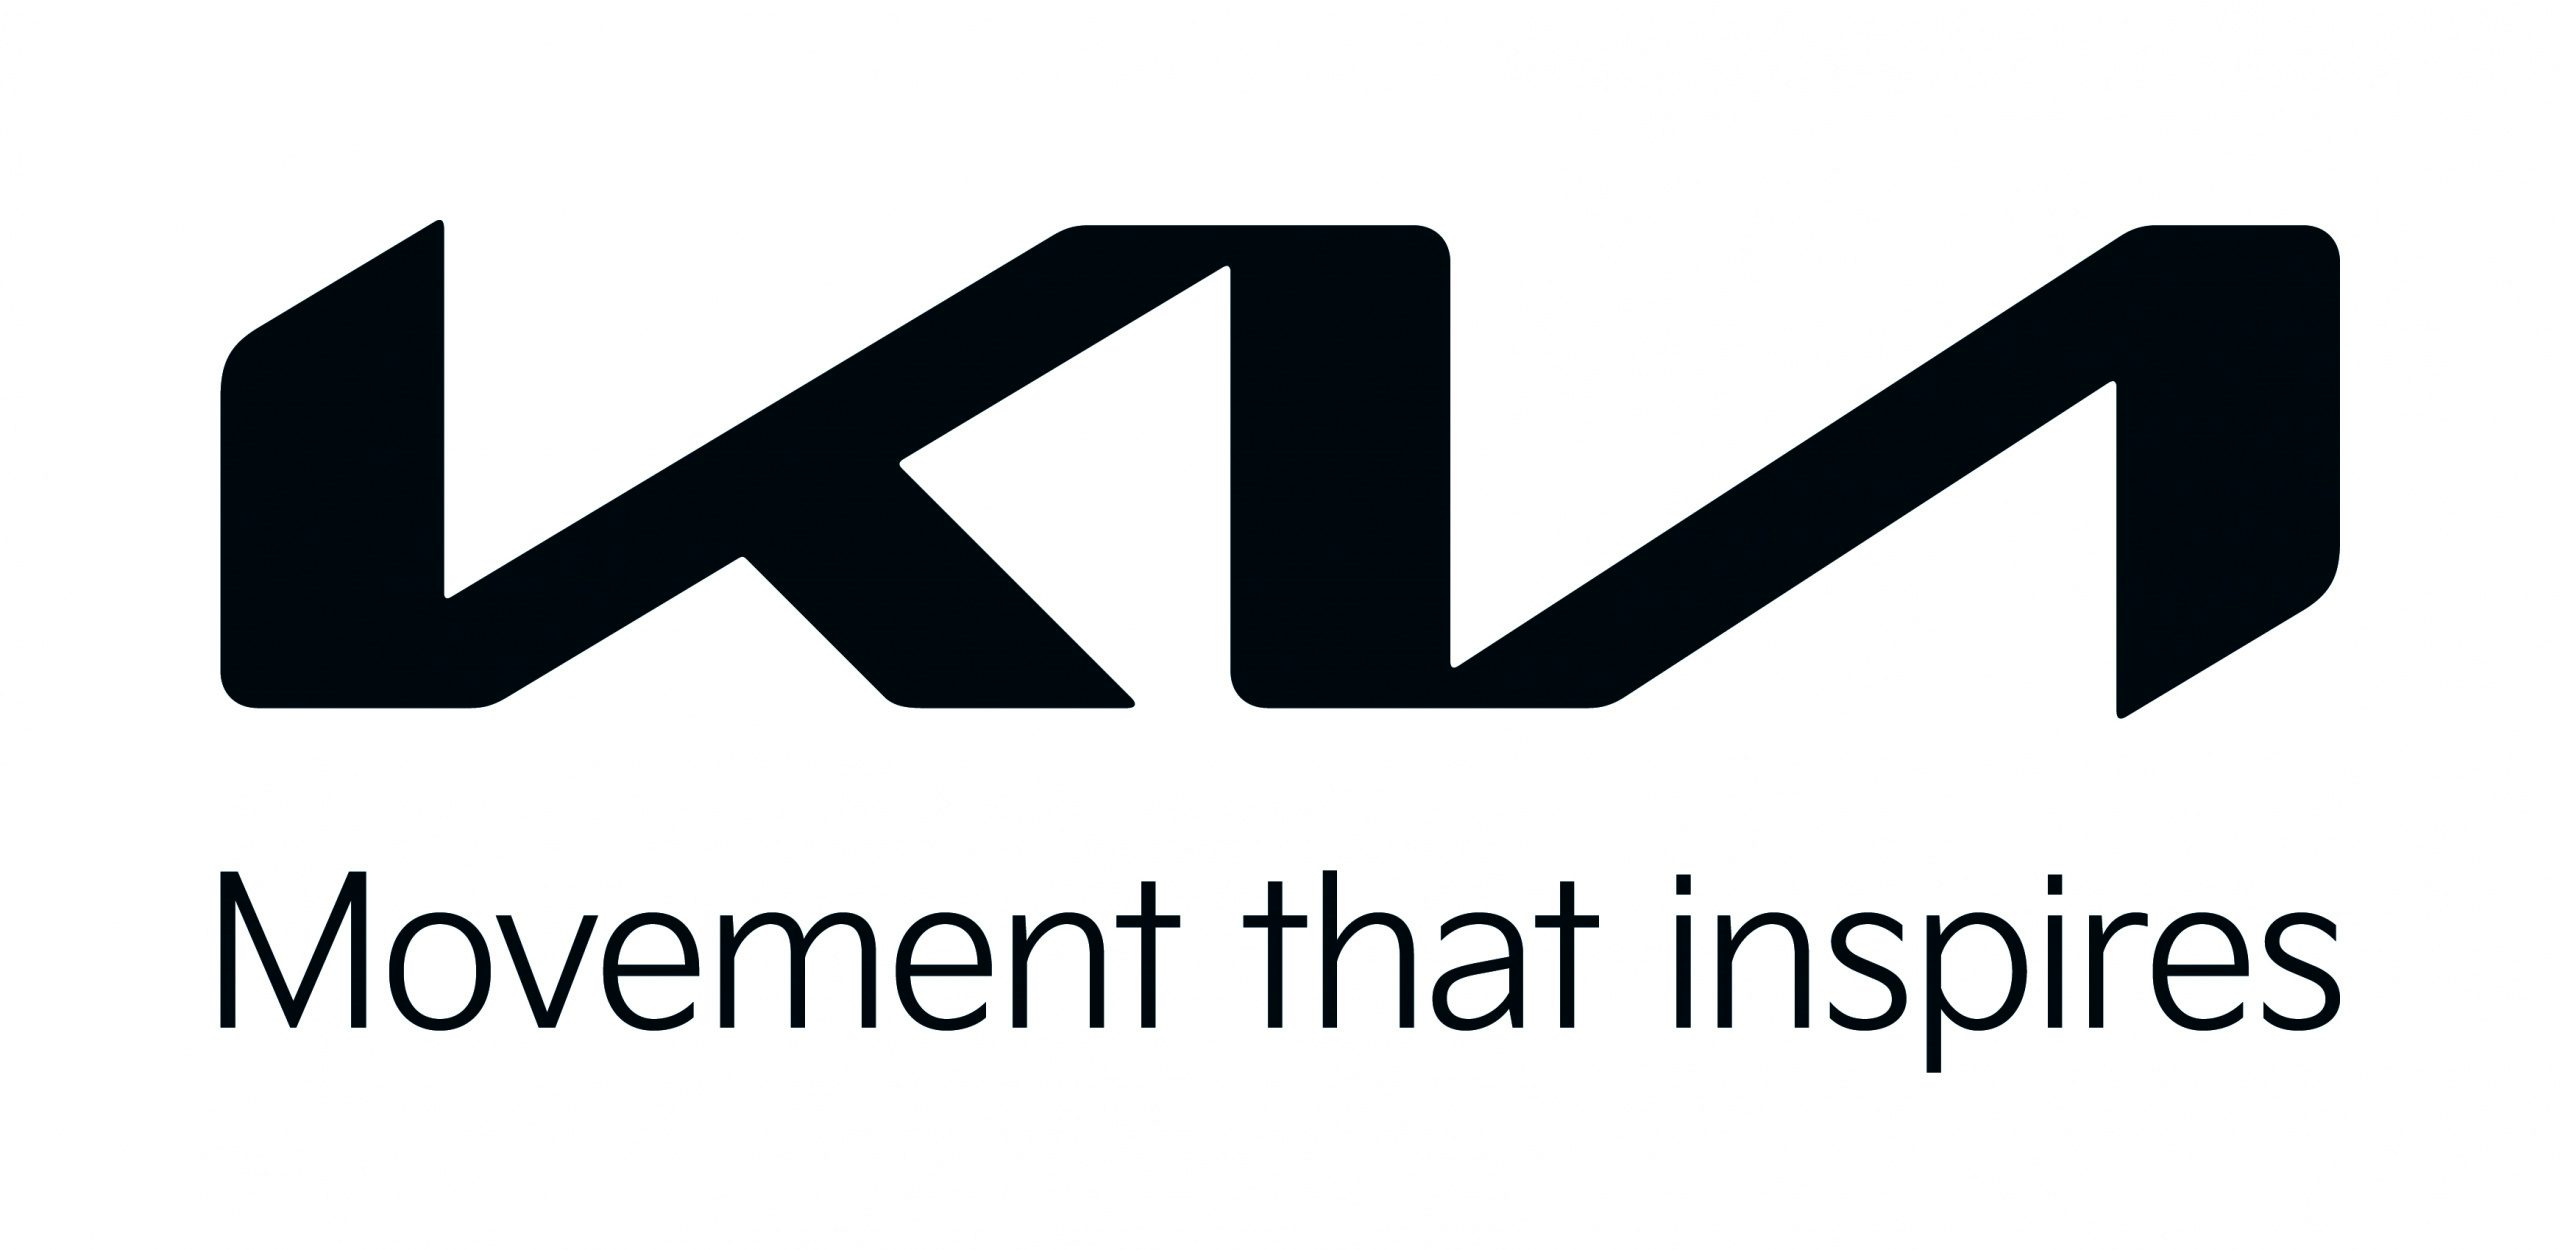 Kia unveils a new signature-inspired logo